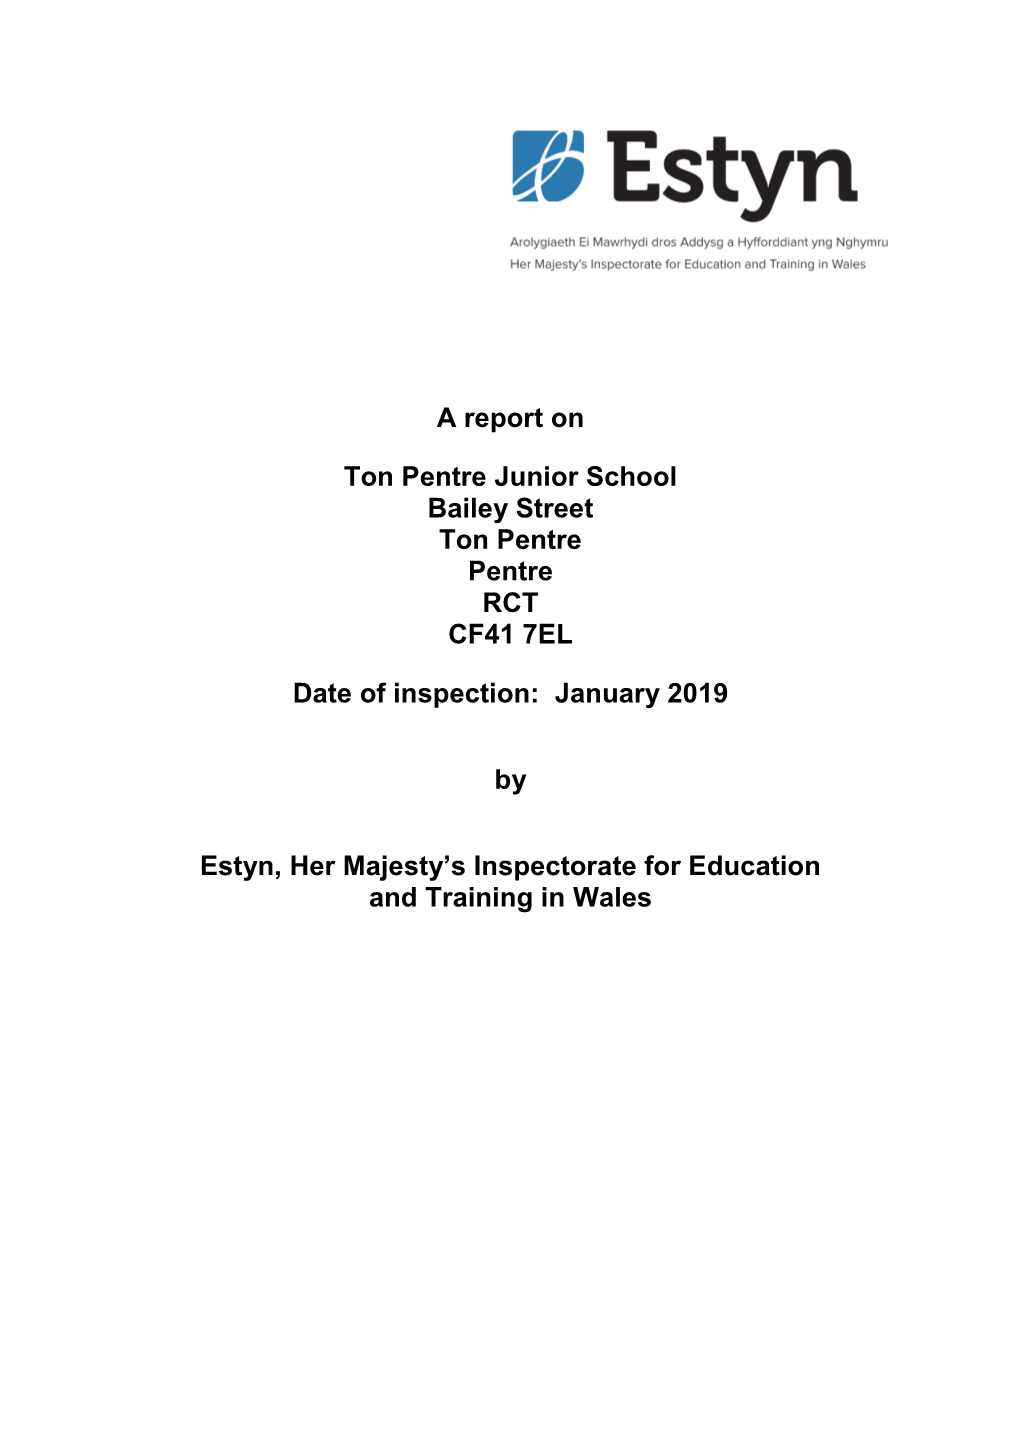 Inspection Report Ton Pentre Junior School 2019